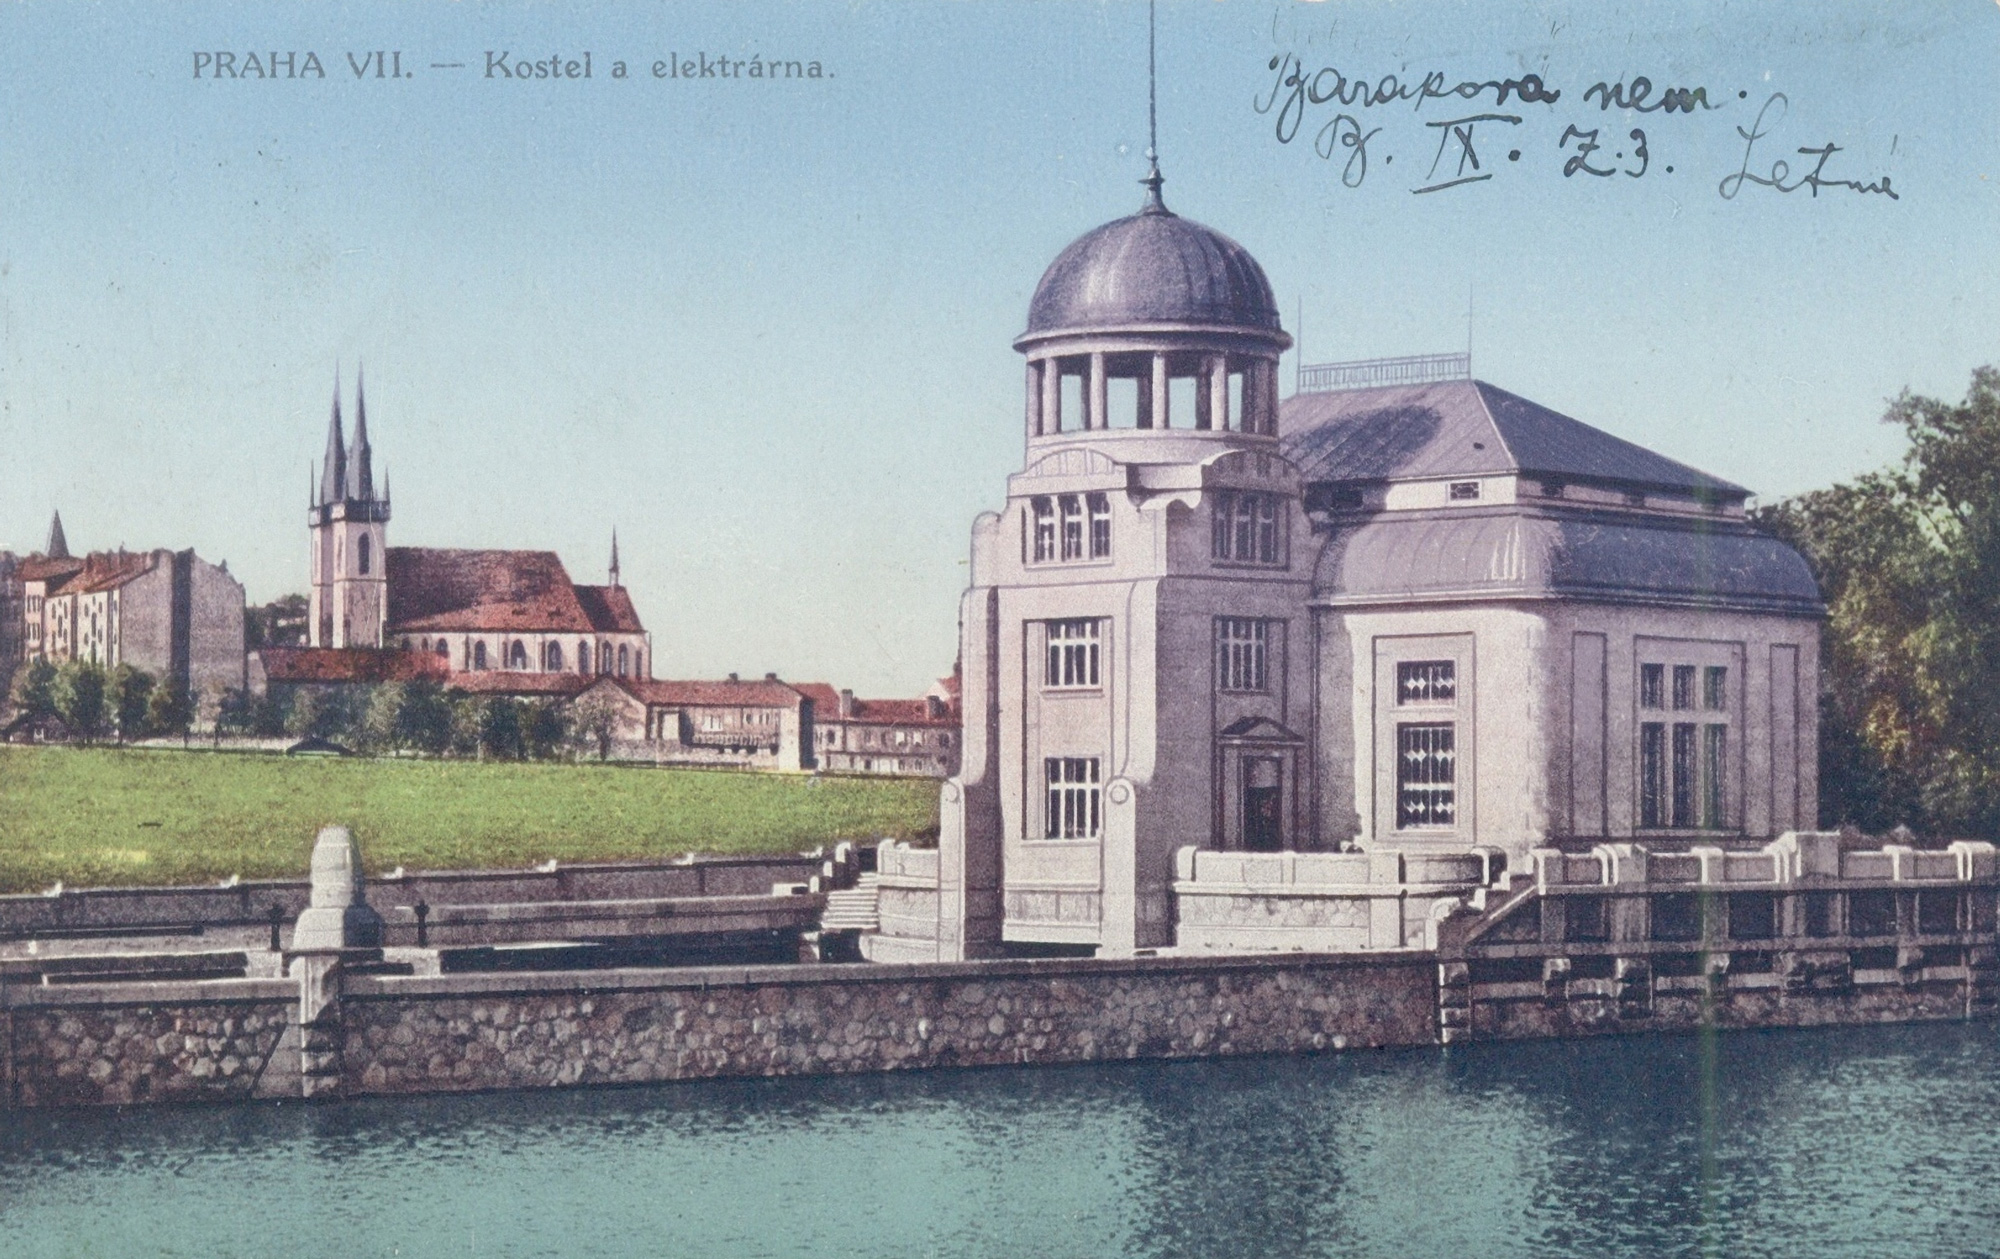 Pohlednice se zobrazenim vodni elektrarny z roku 1915 foto archiv Povodi Vltavy statni podnik